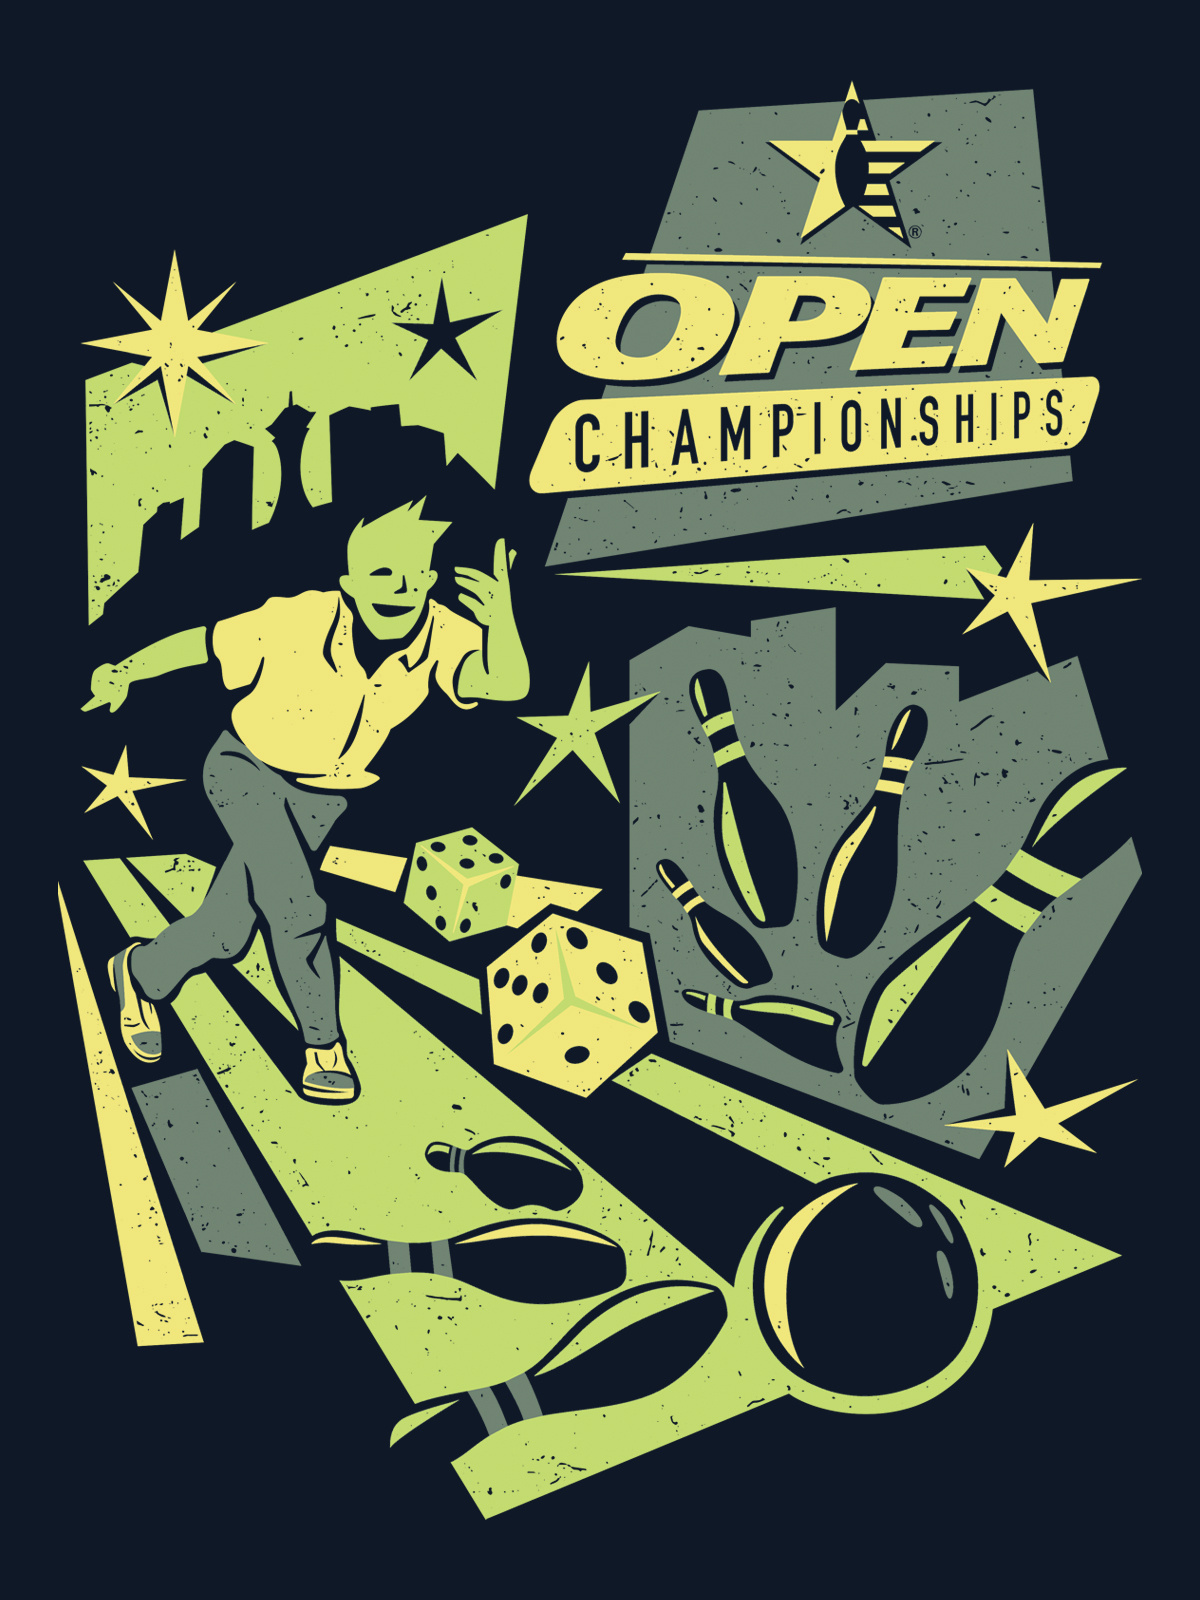 USBC Open Championships Las Vegas Concept by Stephen Gurthet on Dribbble